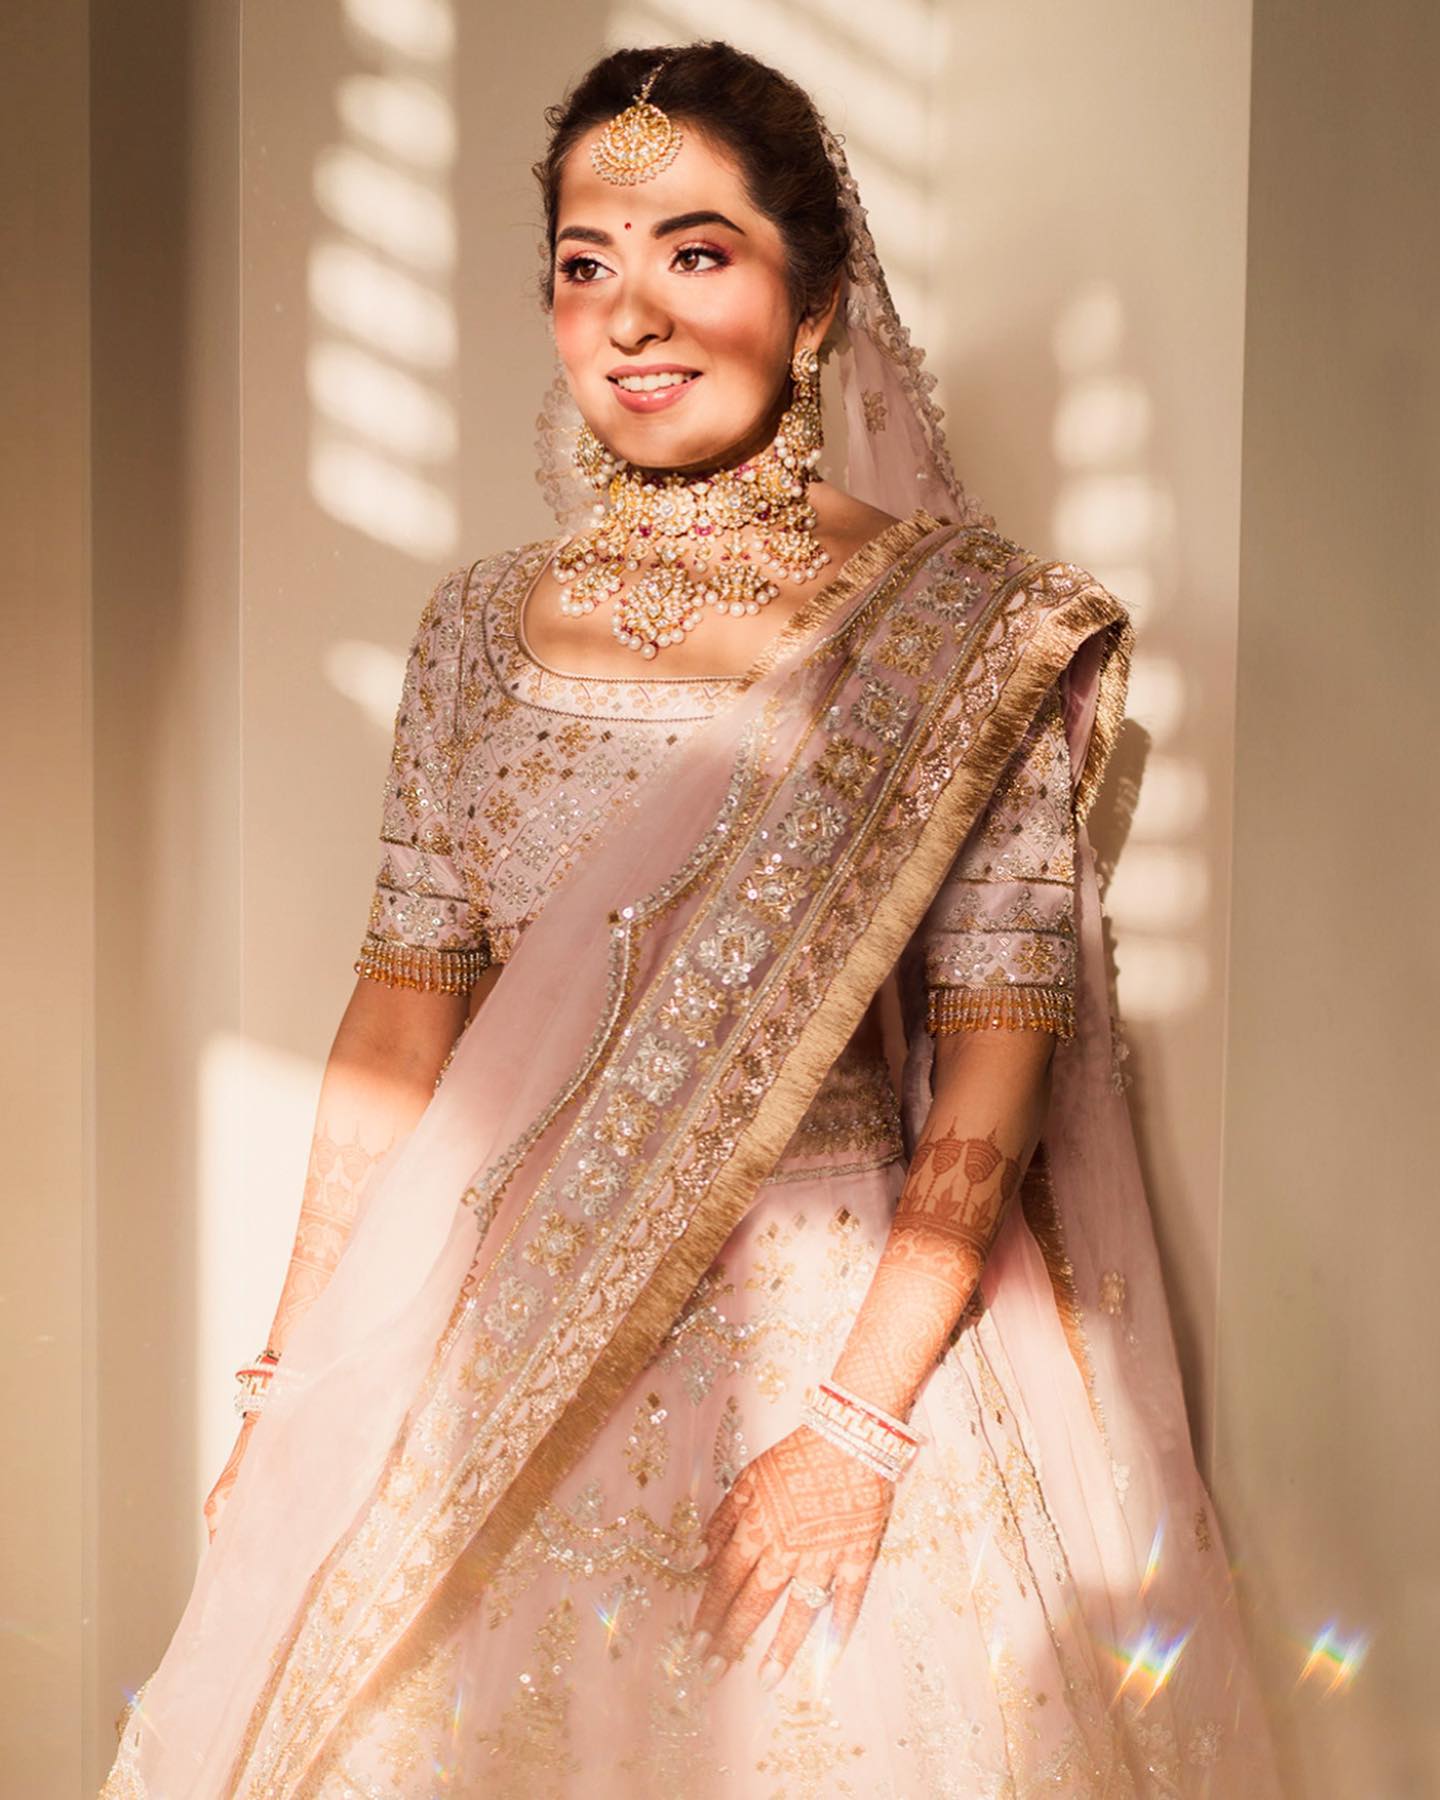 Photo of Bride posing in light pink lehenga and contrasting green jewellery  | Pakistani bridal, Indian wedding dress, Indian bride